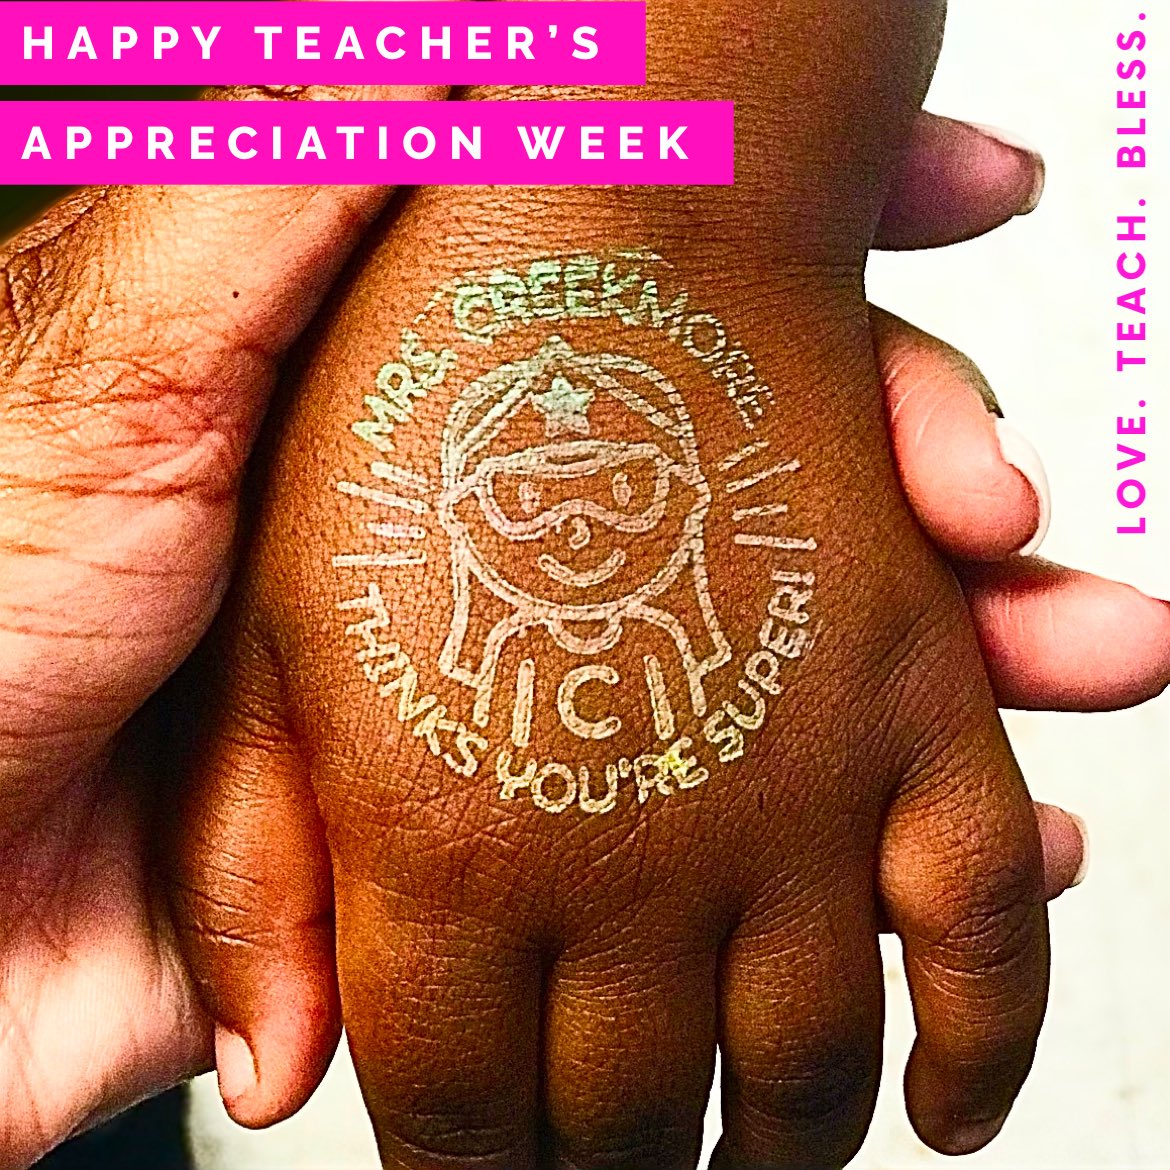 Happy Teacher’s Appreciation Week! #payteachersmore #givethemaseatatthetables #appreciation